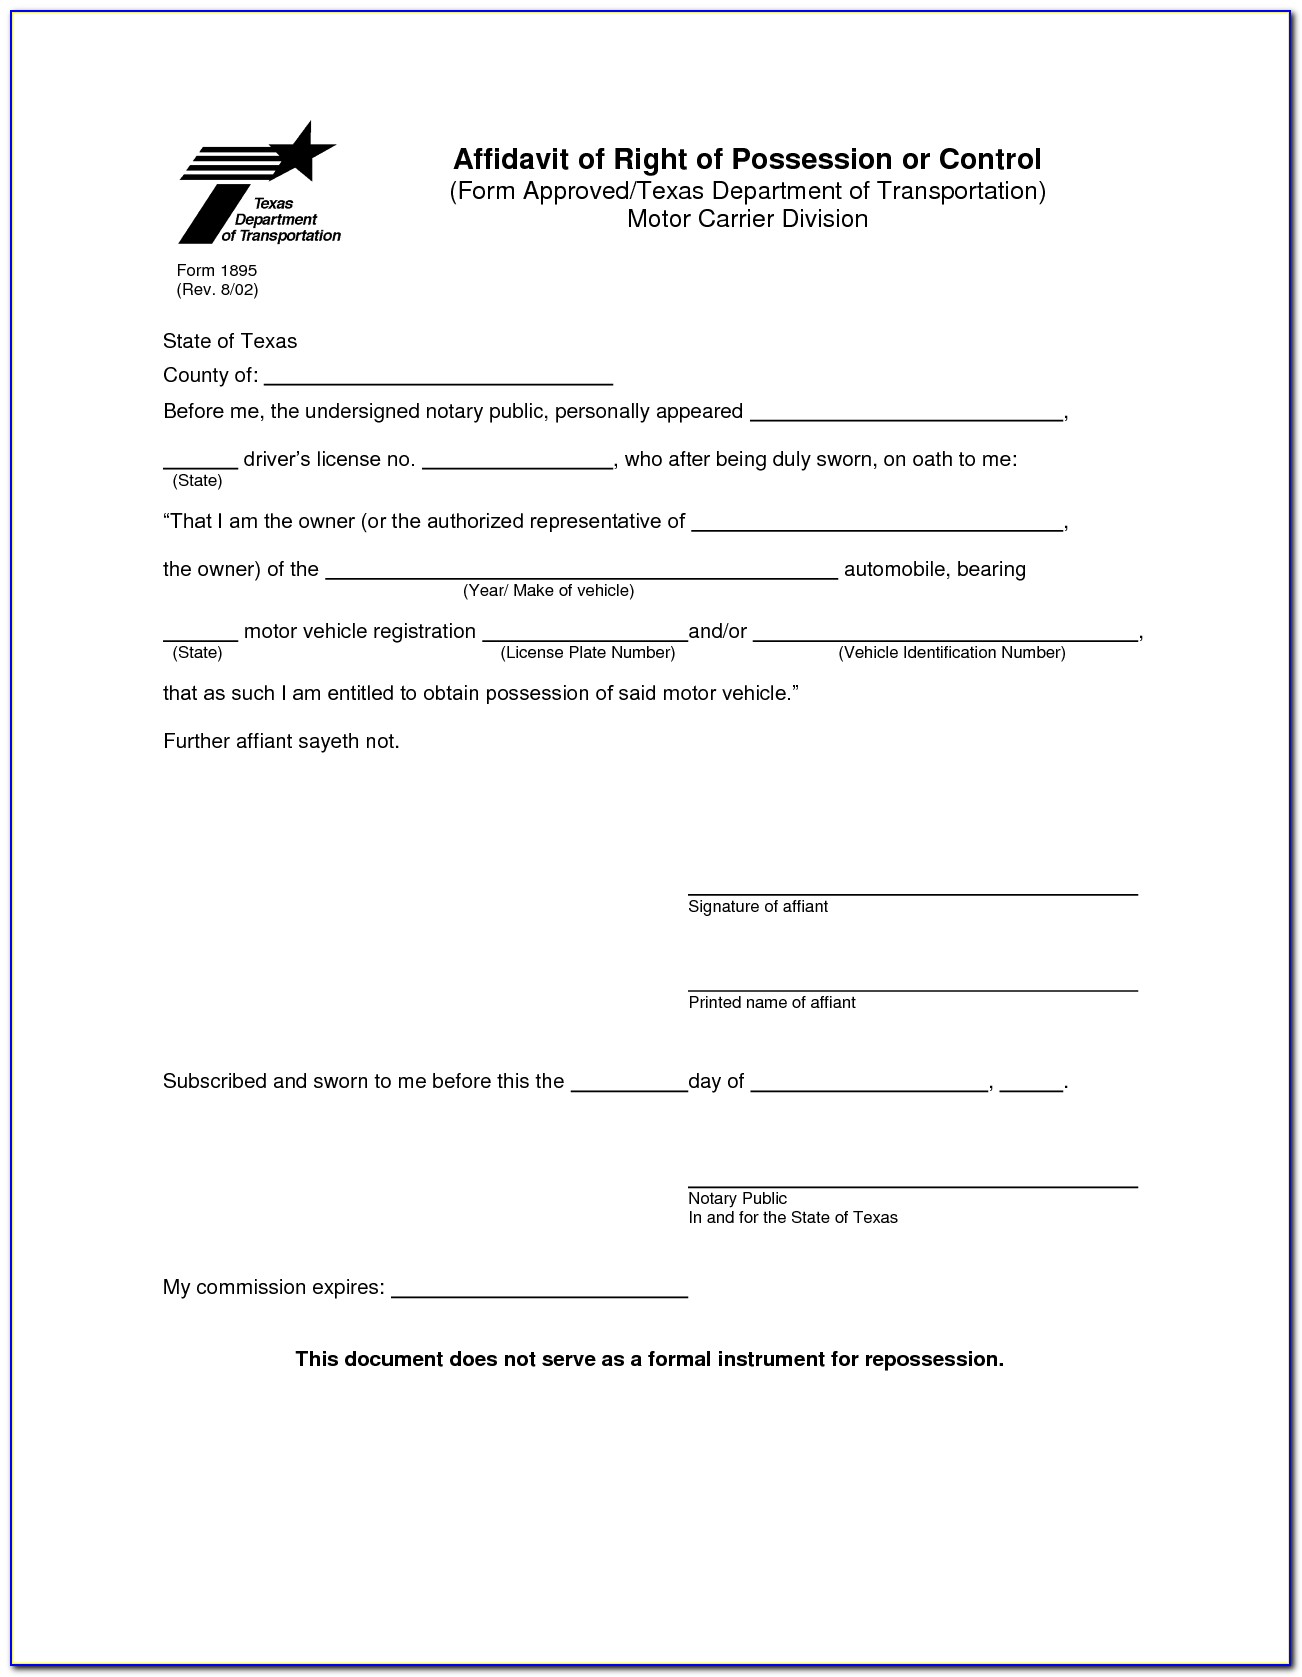 notary-public-affidavit-california-form-resume-examples-e4k4ne15qn